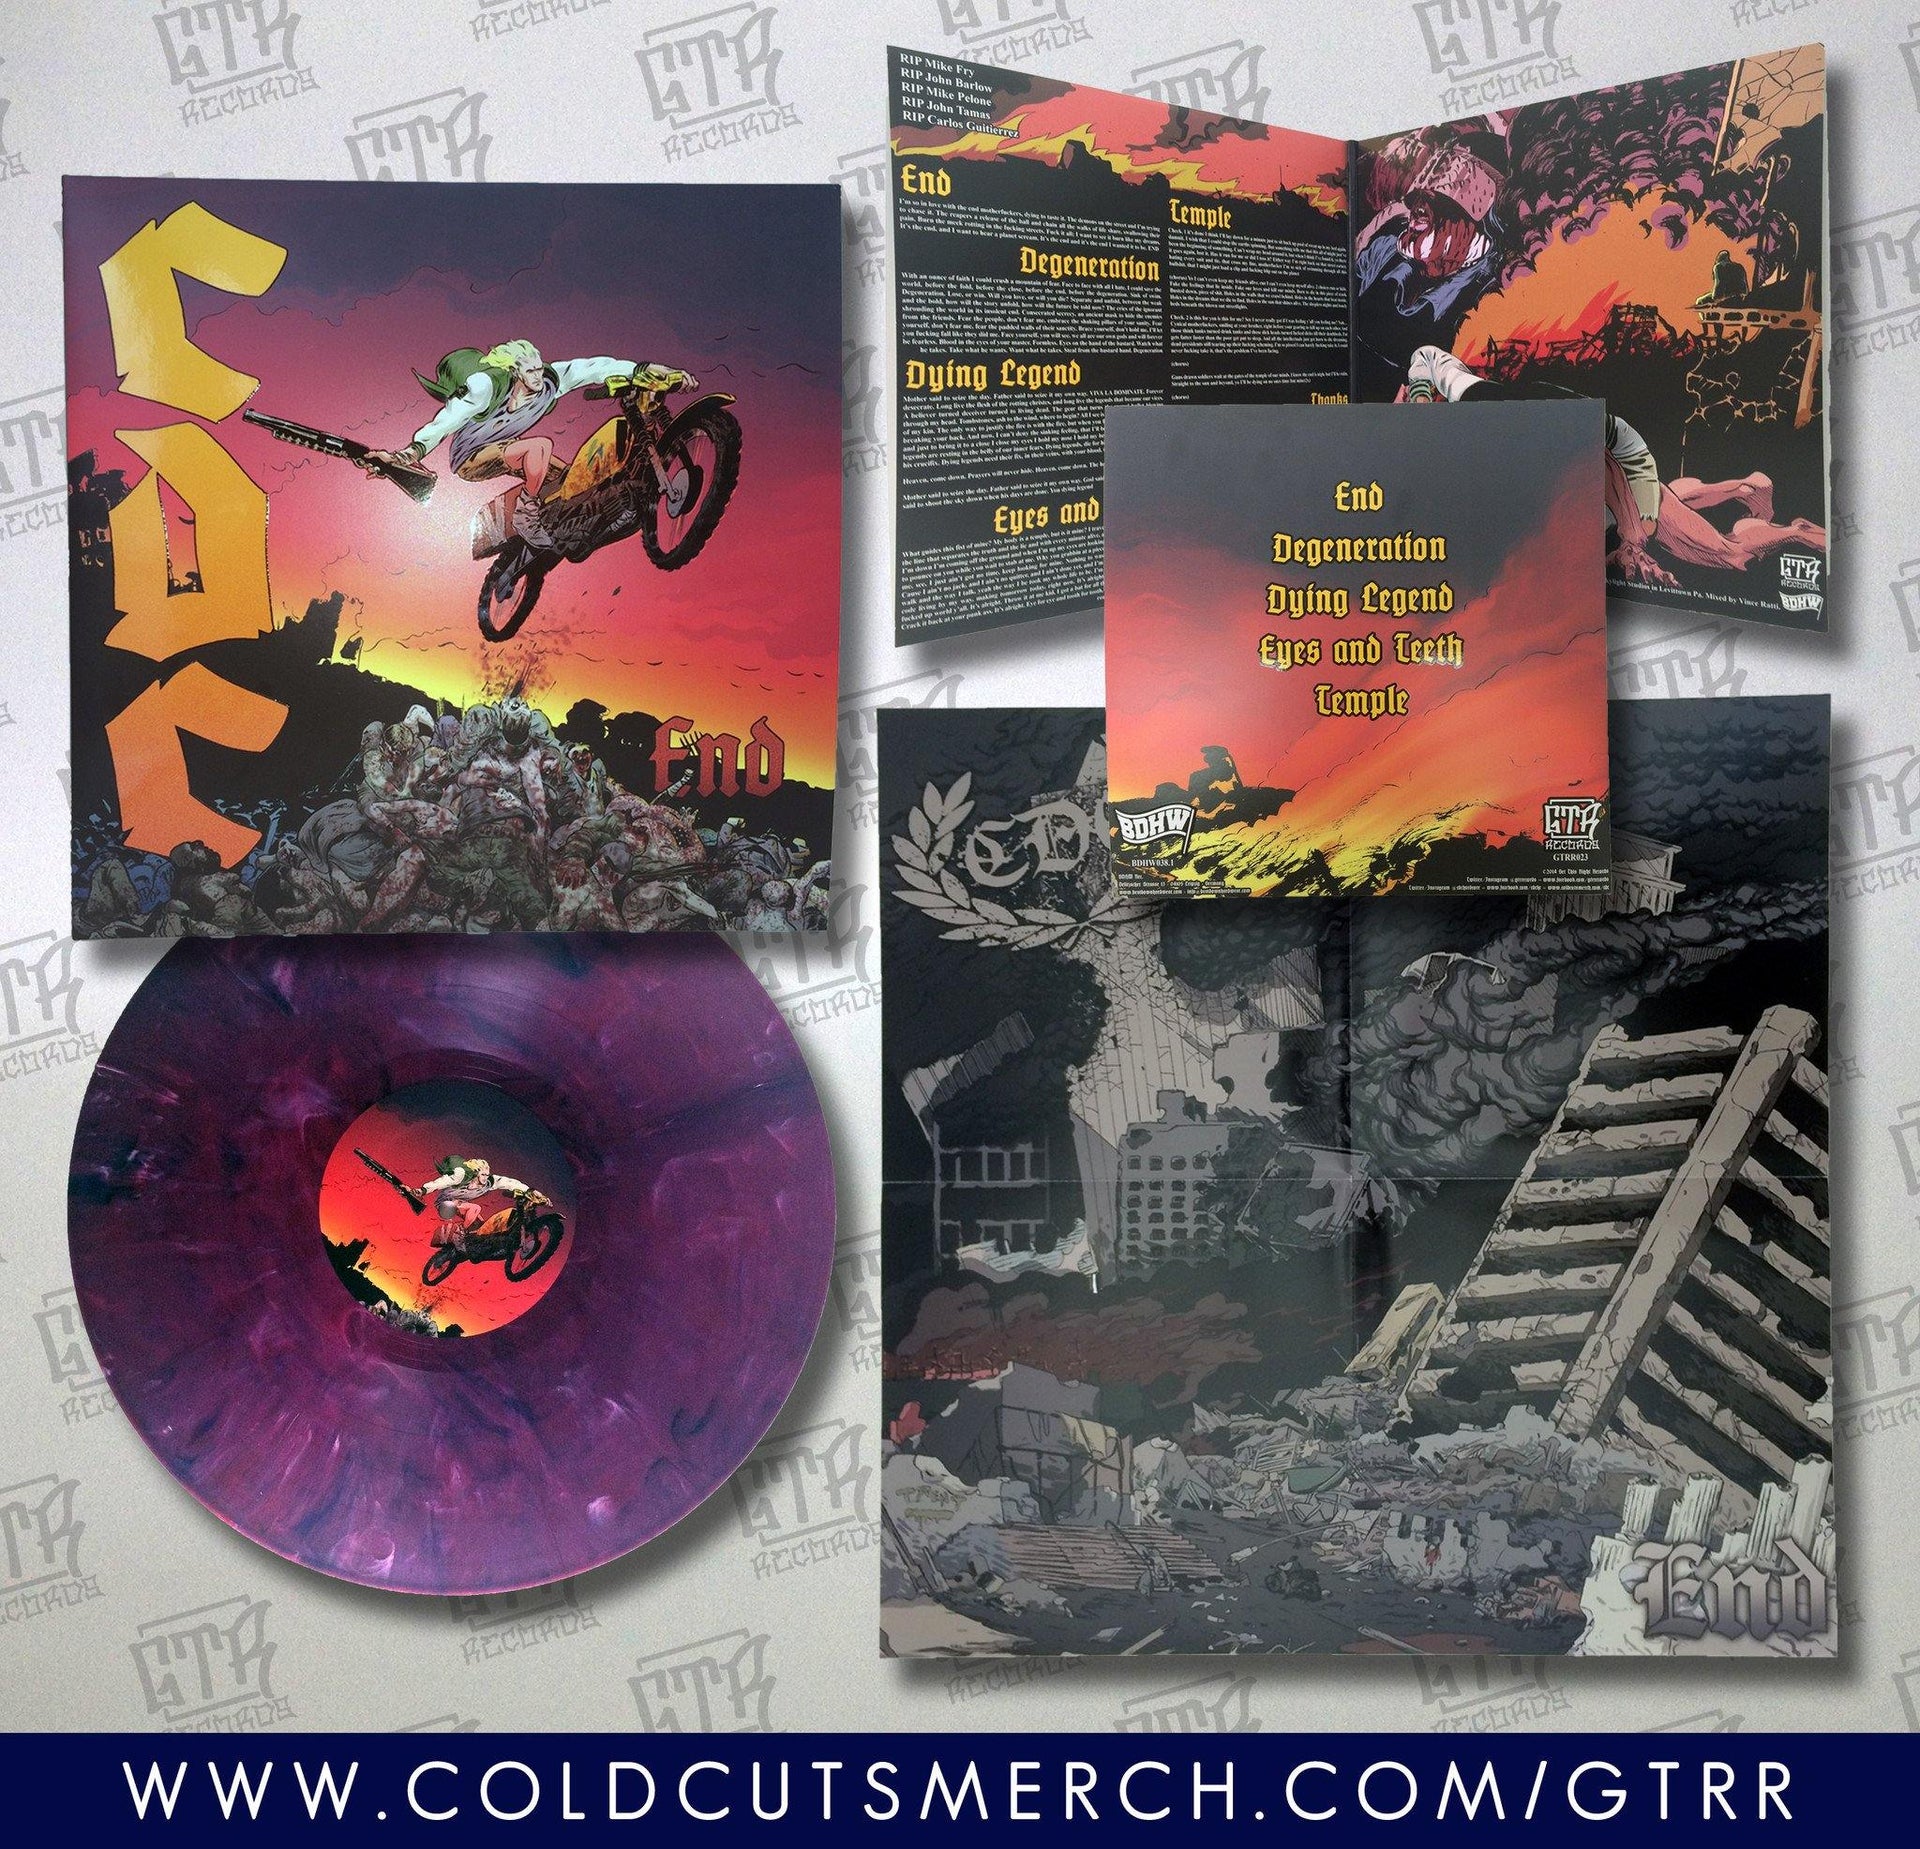 Buy – CDC "End" 12" – Band & Music Merch – Cold Cuts Merch